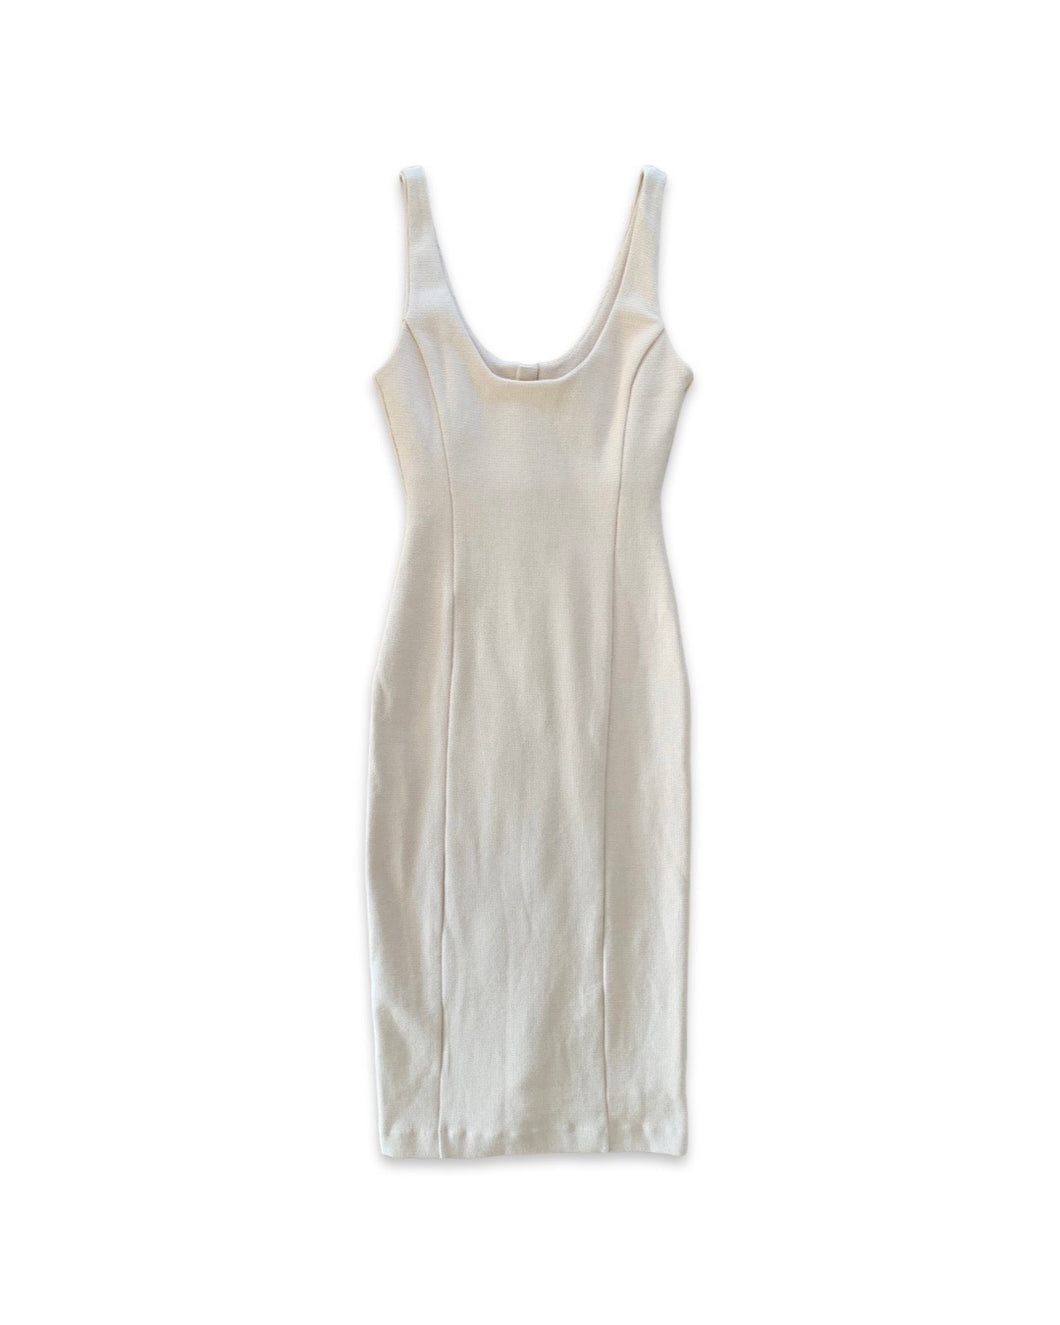 KOOKAI Size 8 (36) Cotton Dress in Dusk Pink SEP6721